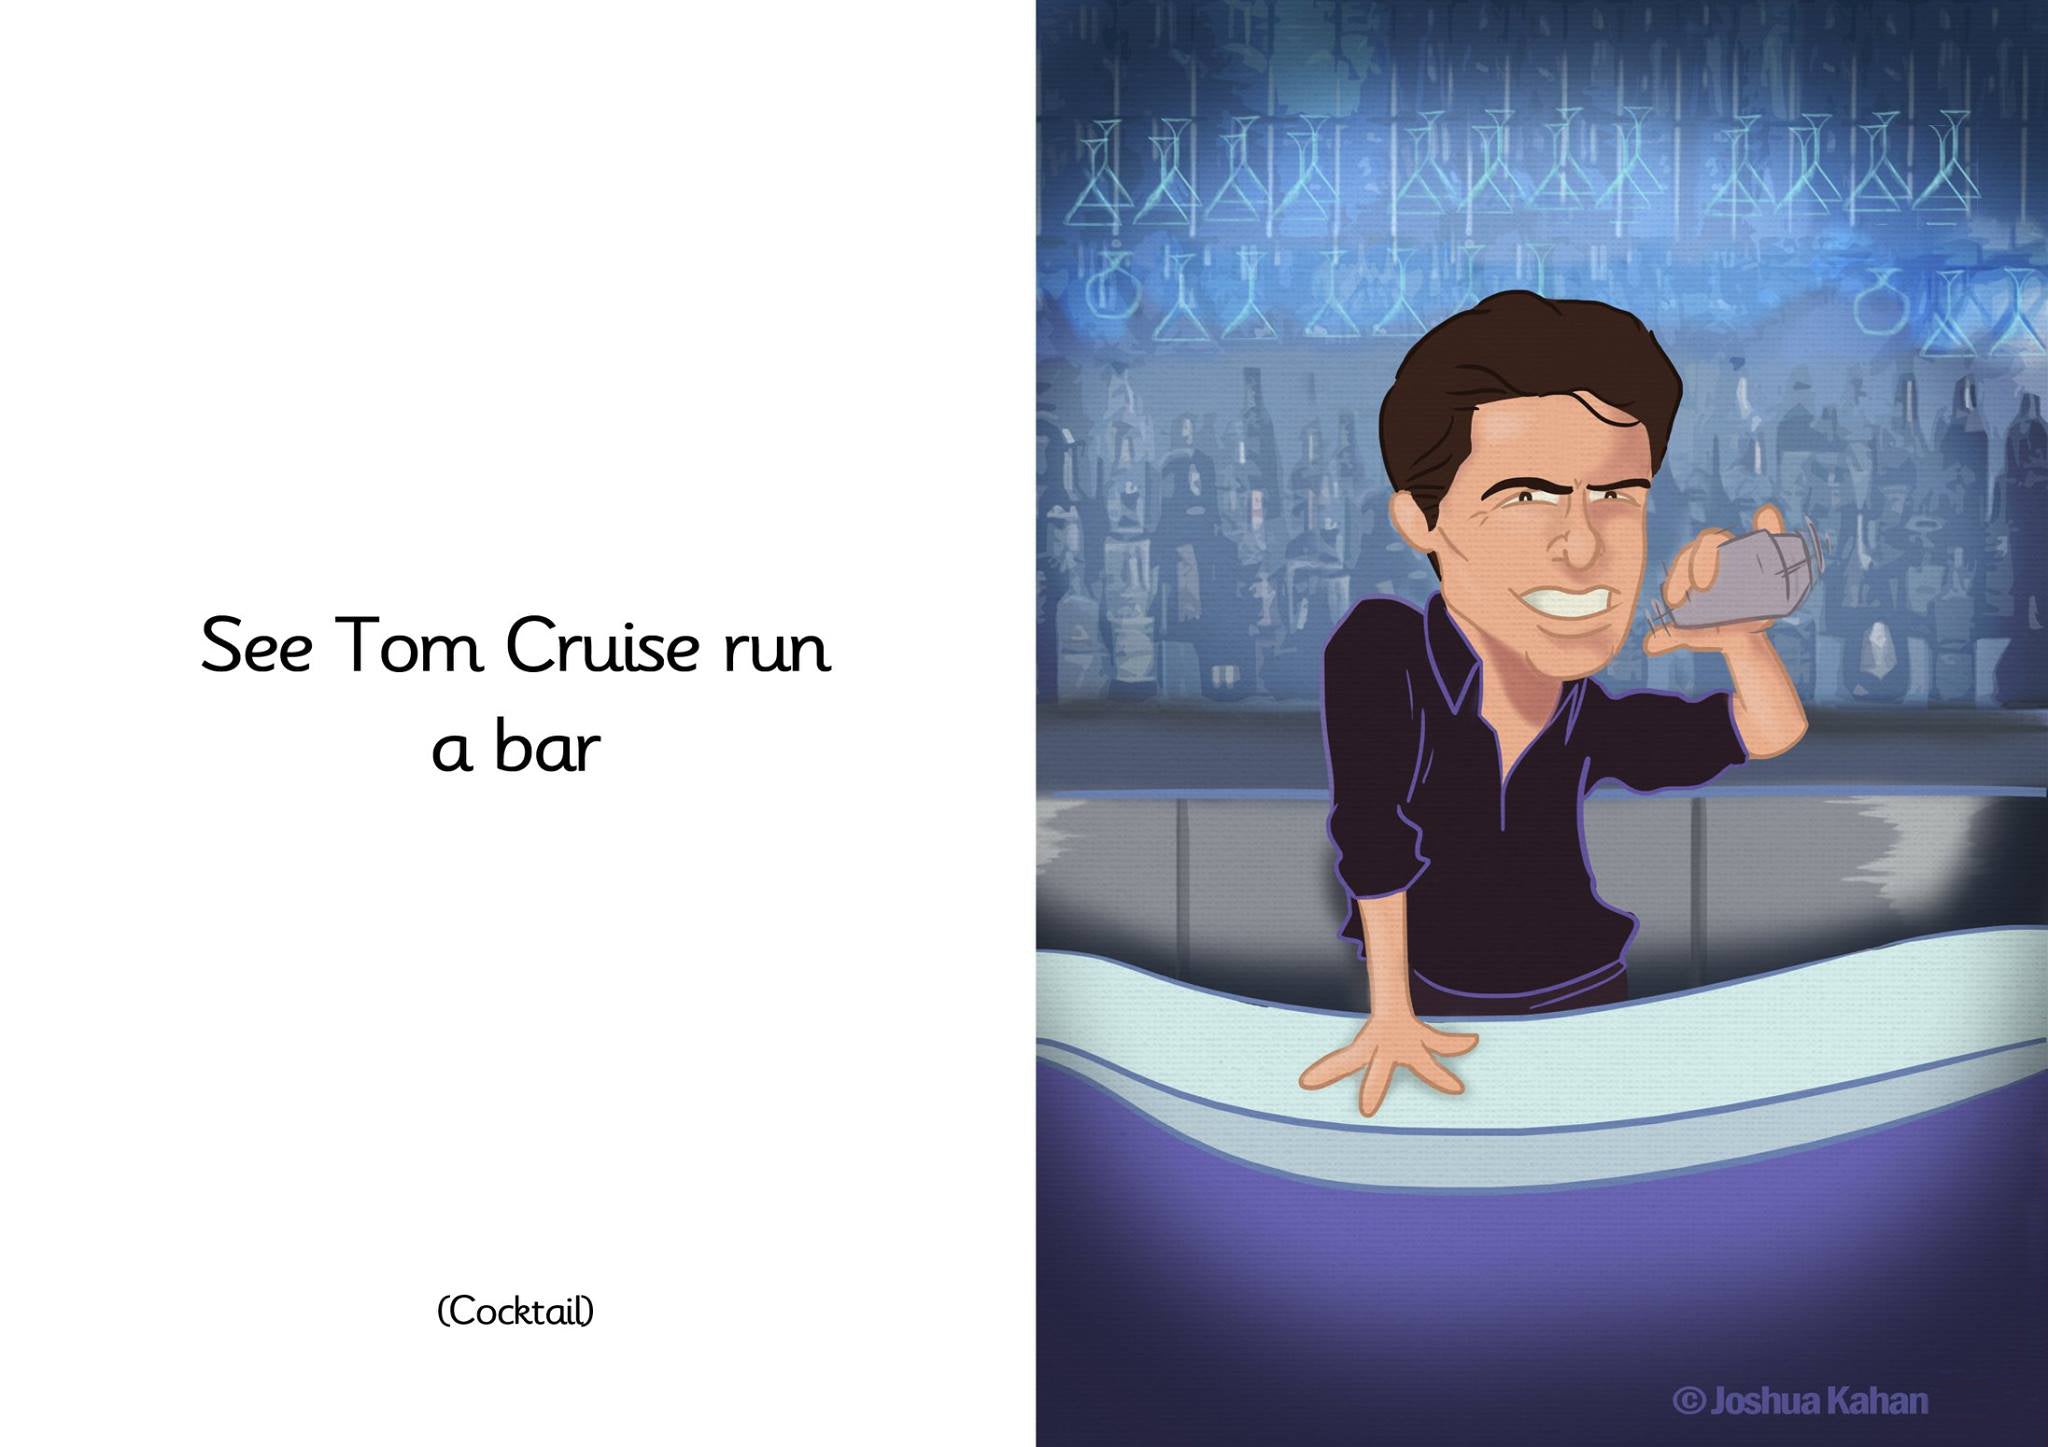 See Tom Cruise Run